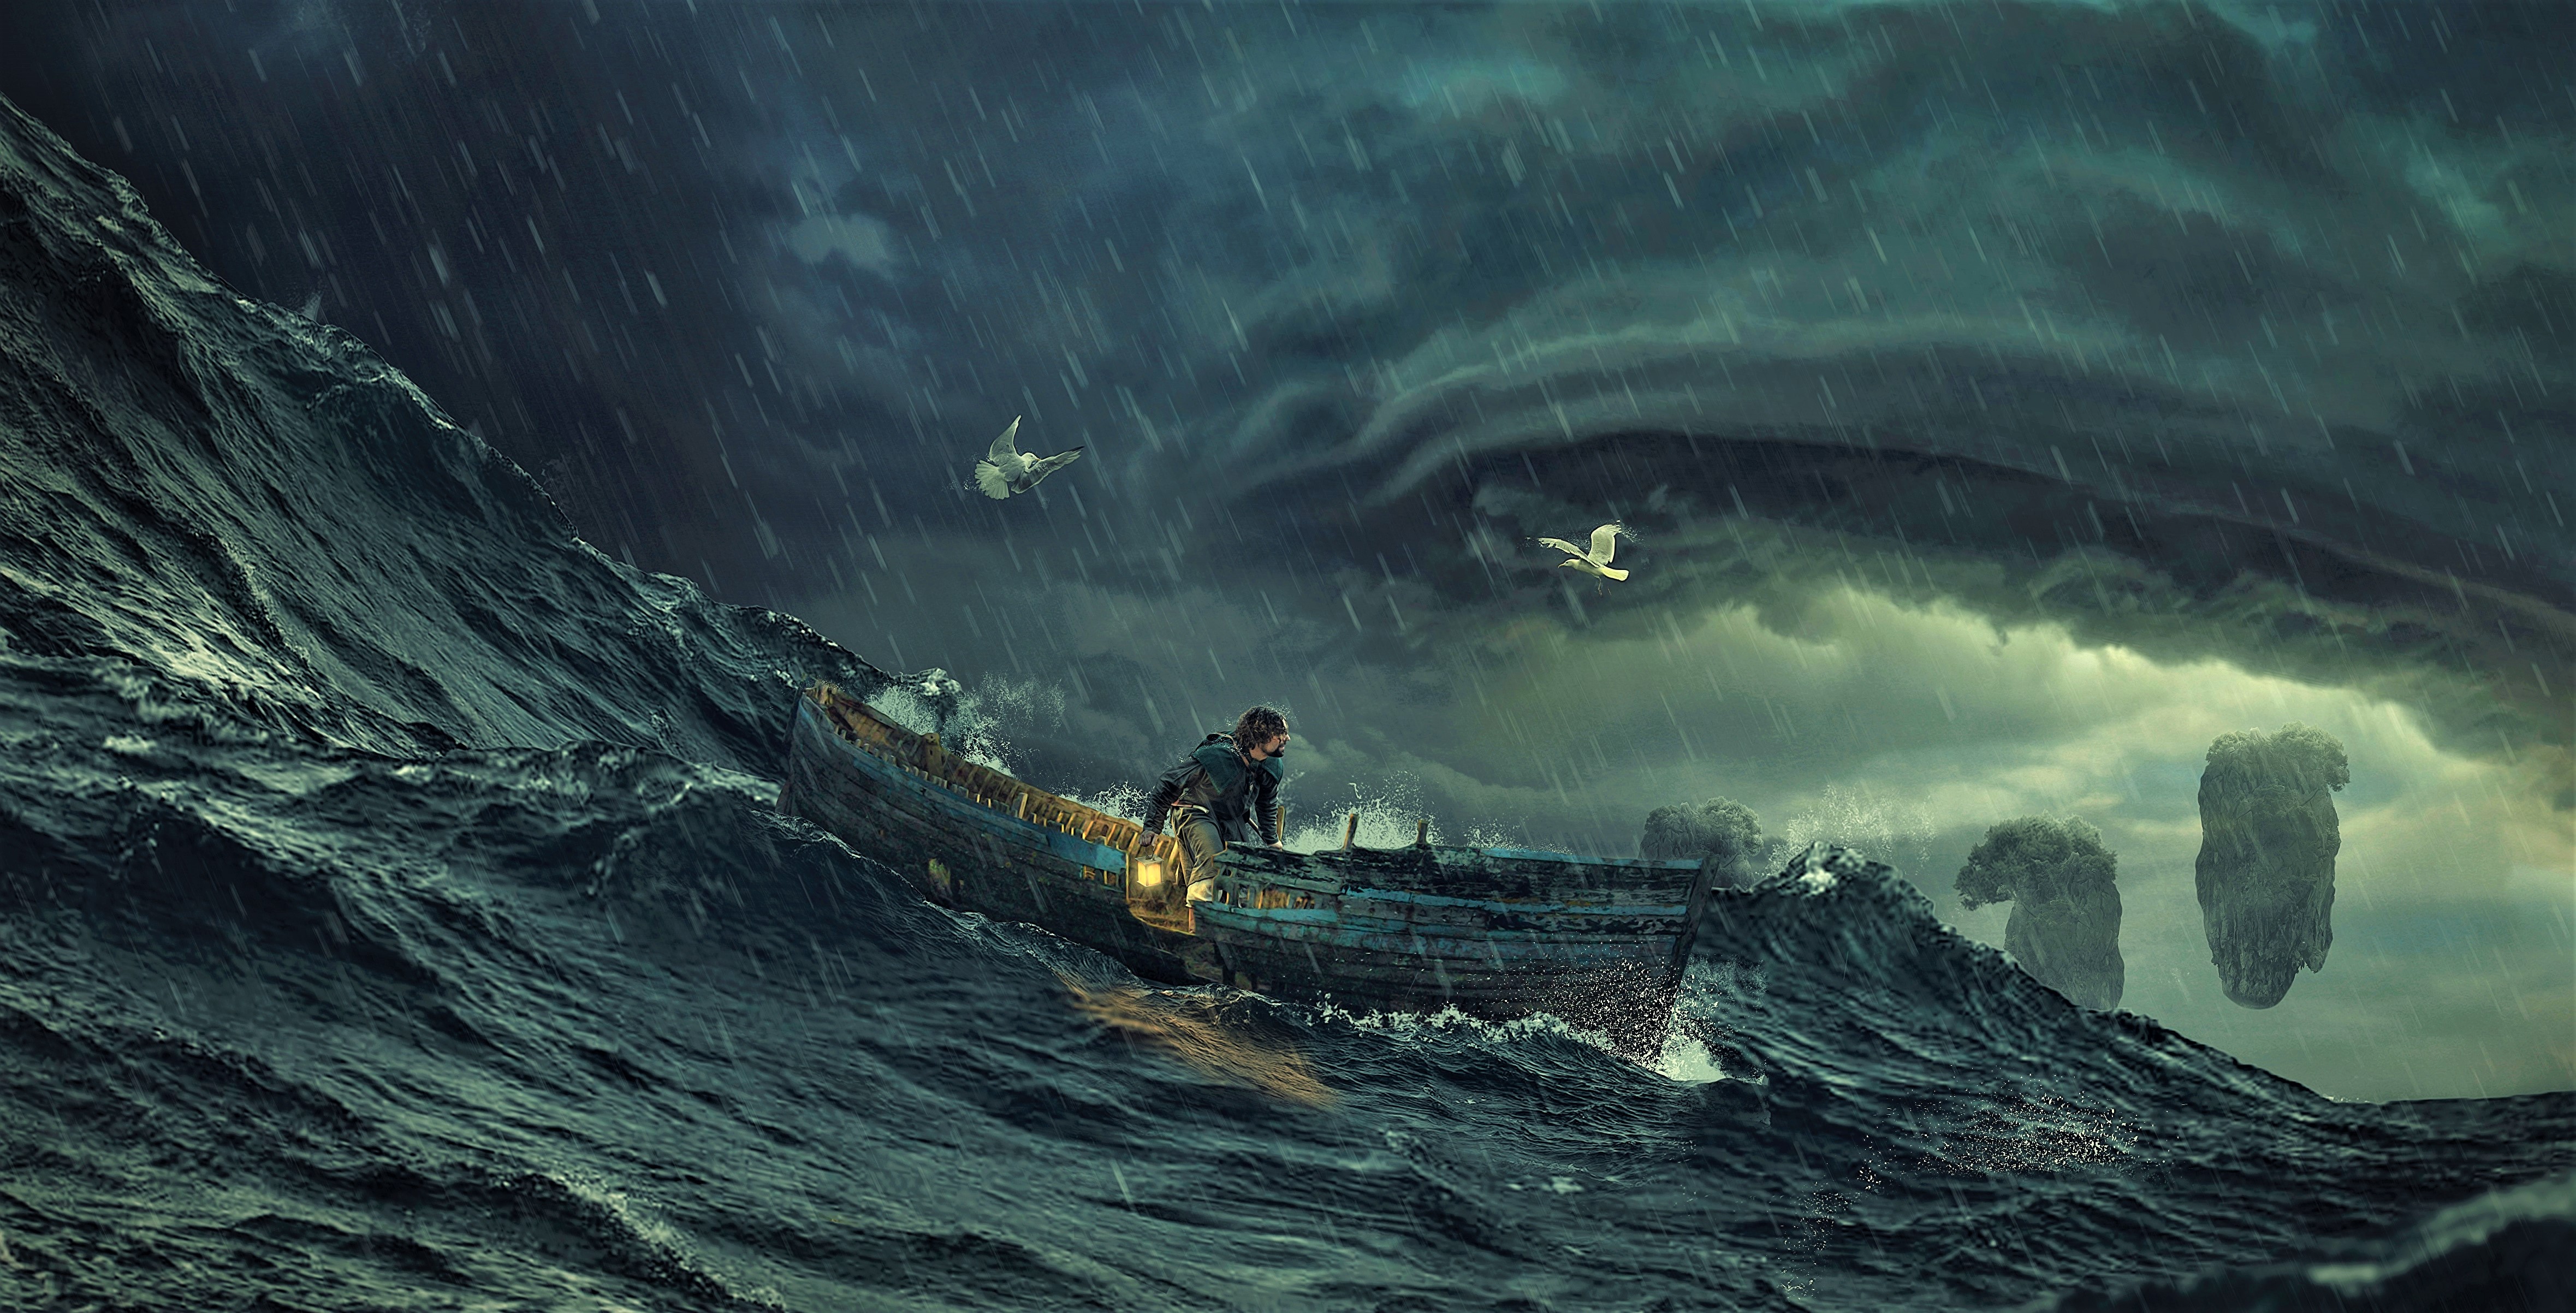 HD desktop wallpaper: Fantasy, Sea, Ocean, Boat, Storm, Artistic, Wave  download free picture #904881